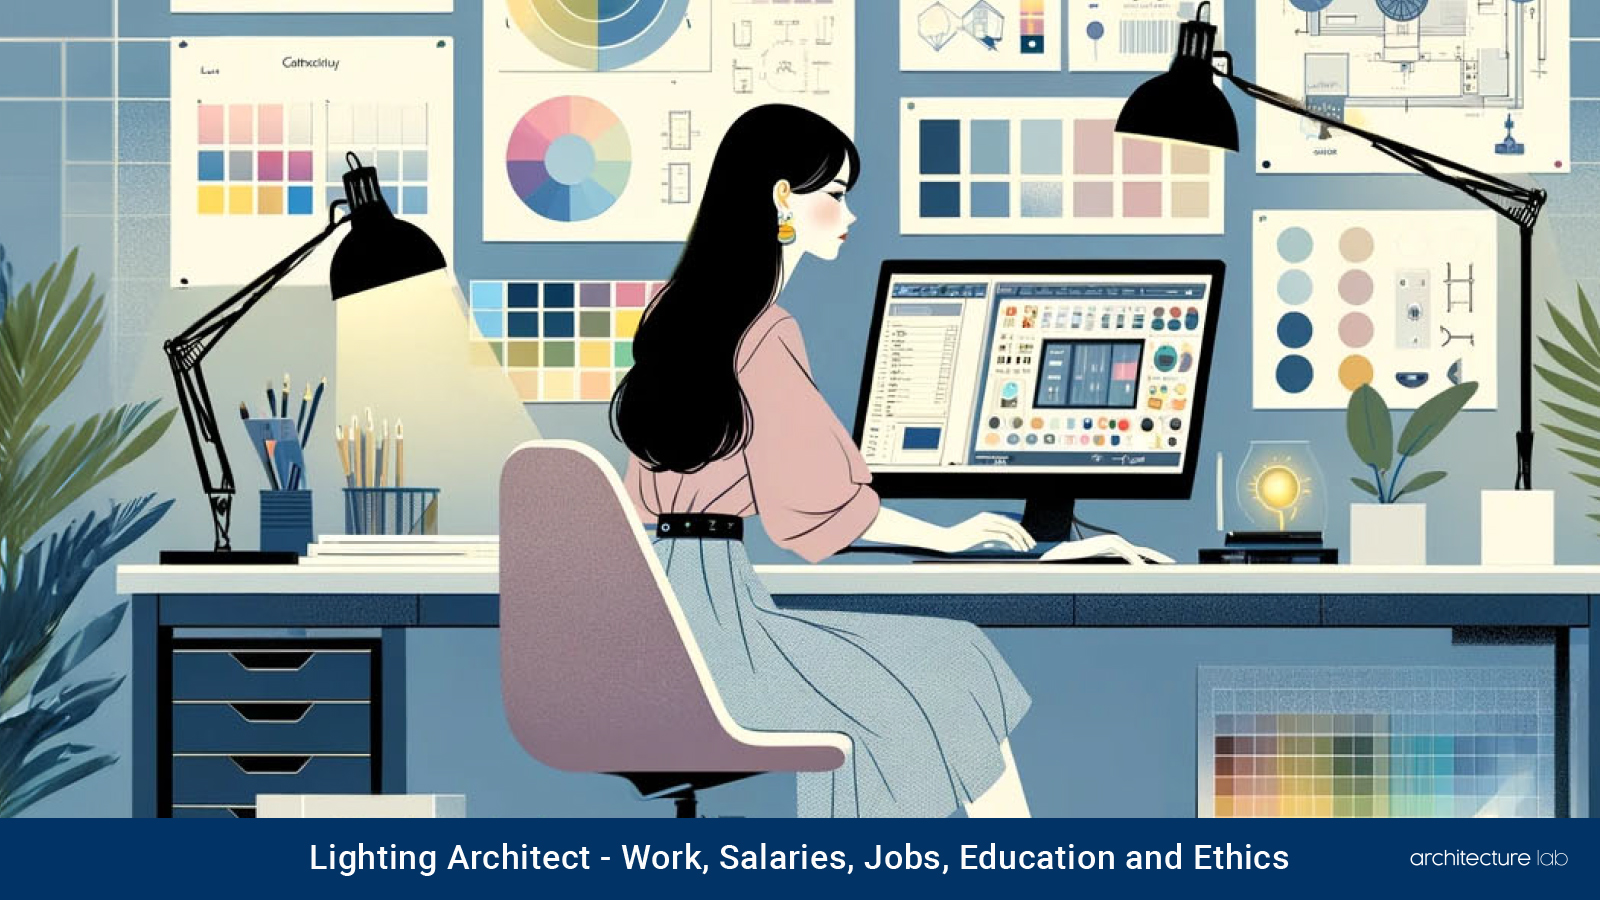 Lighting architect: work, salaries, jobs, education and ethics